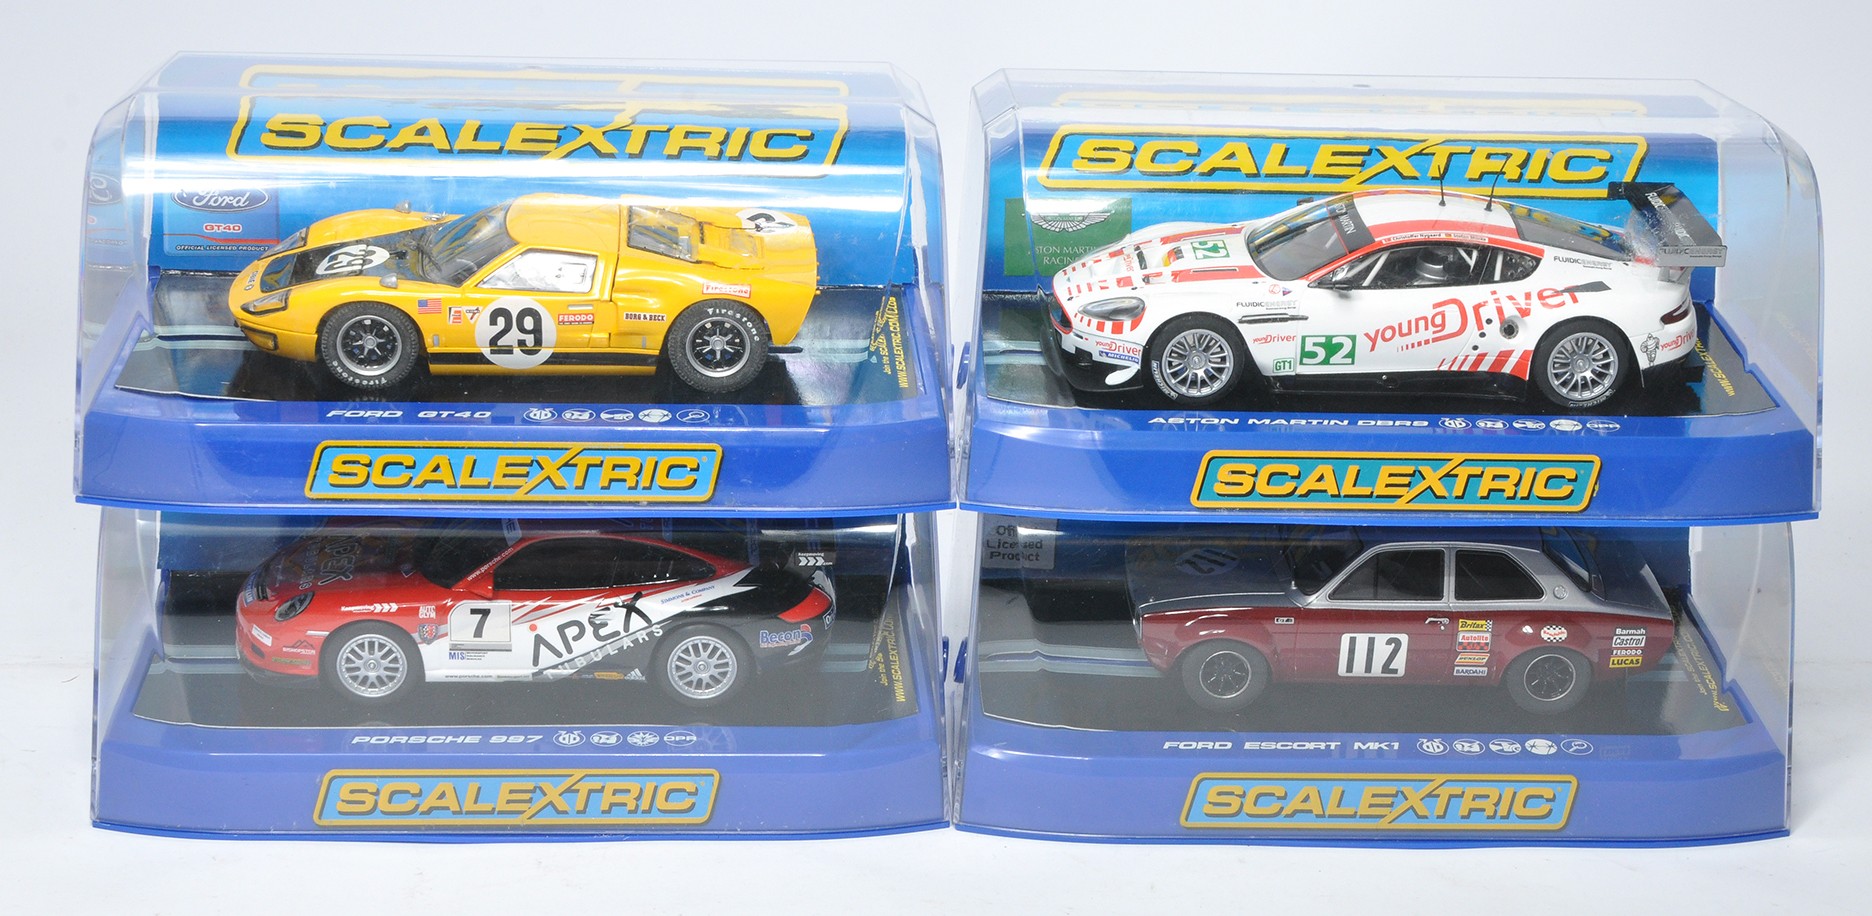 Scalextric slot car issues comprising Porsche 987. Ford GT40, Ford Escort MK1 plus Aston Martin